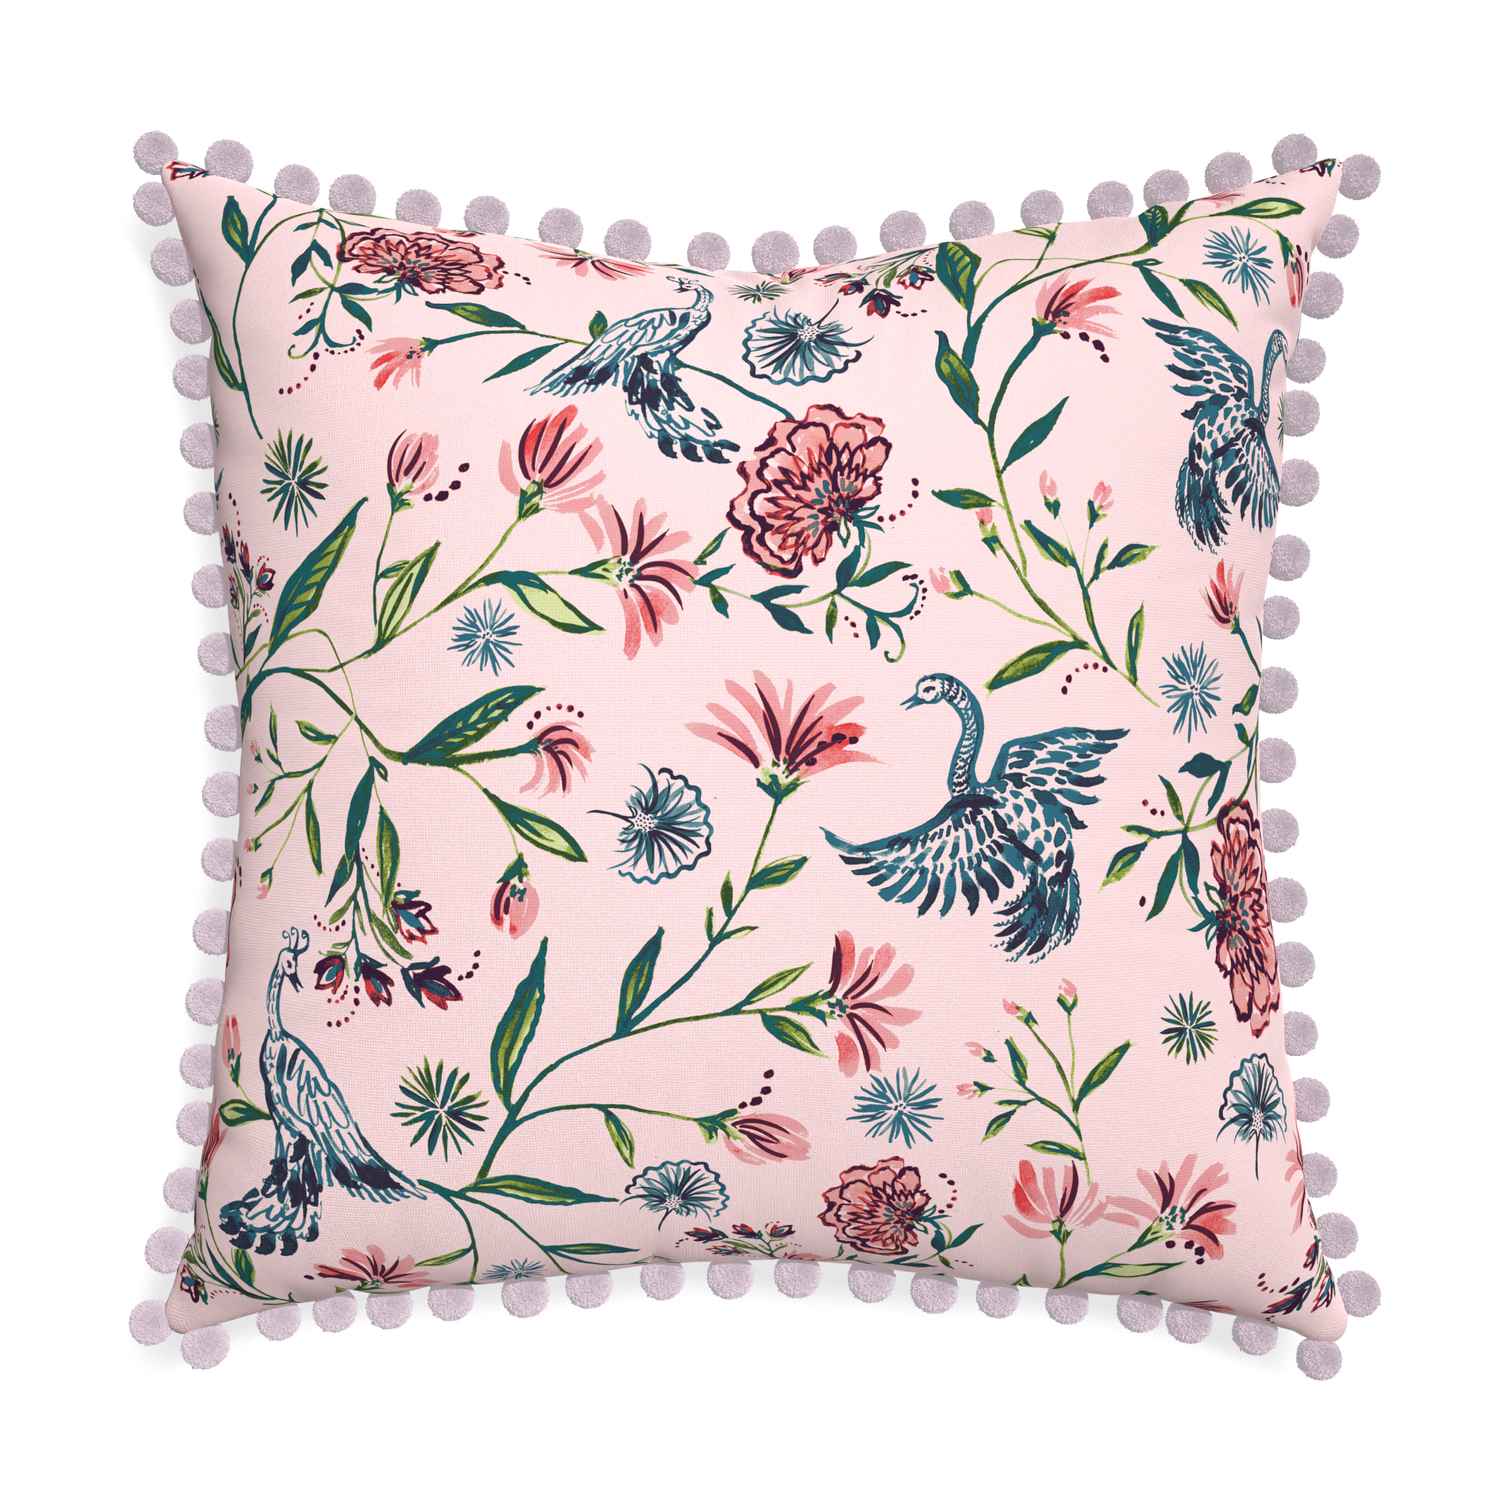 Euro-sham daphne rose custom pillow with l on white background